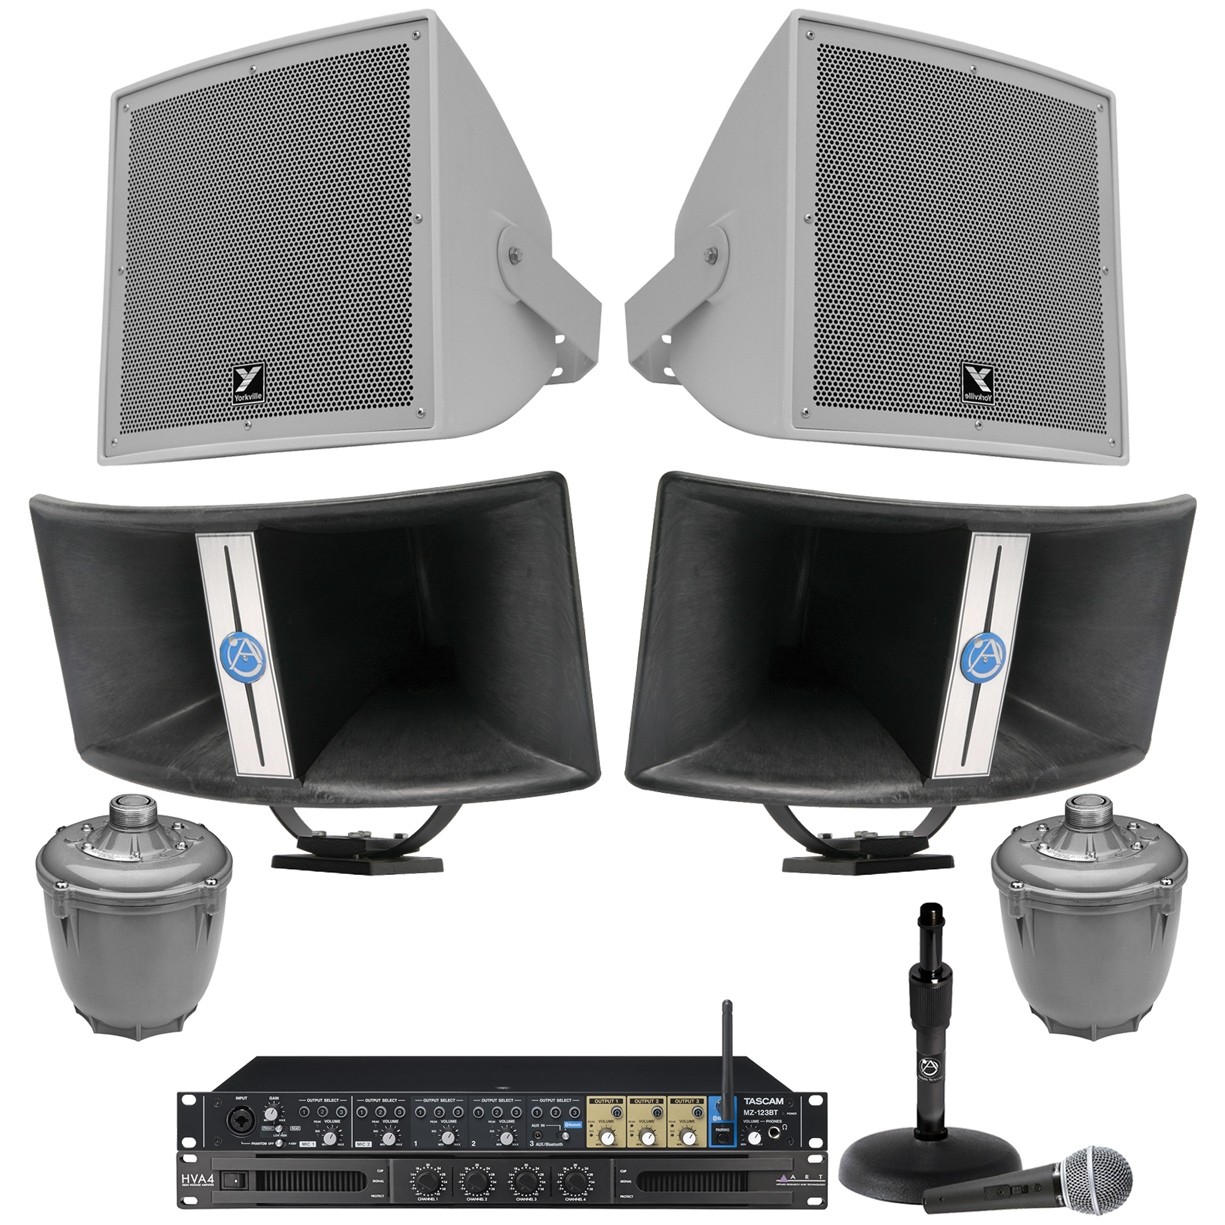 Stadium Sound System